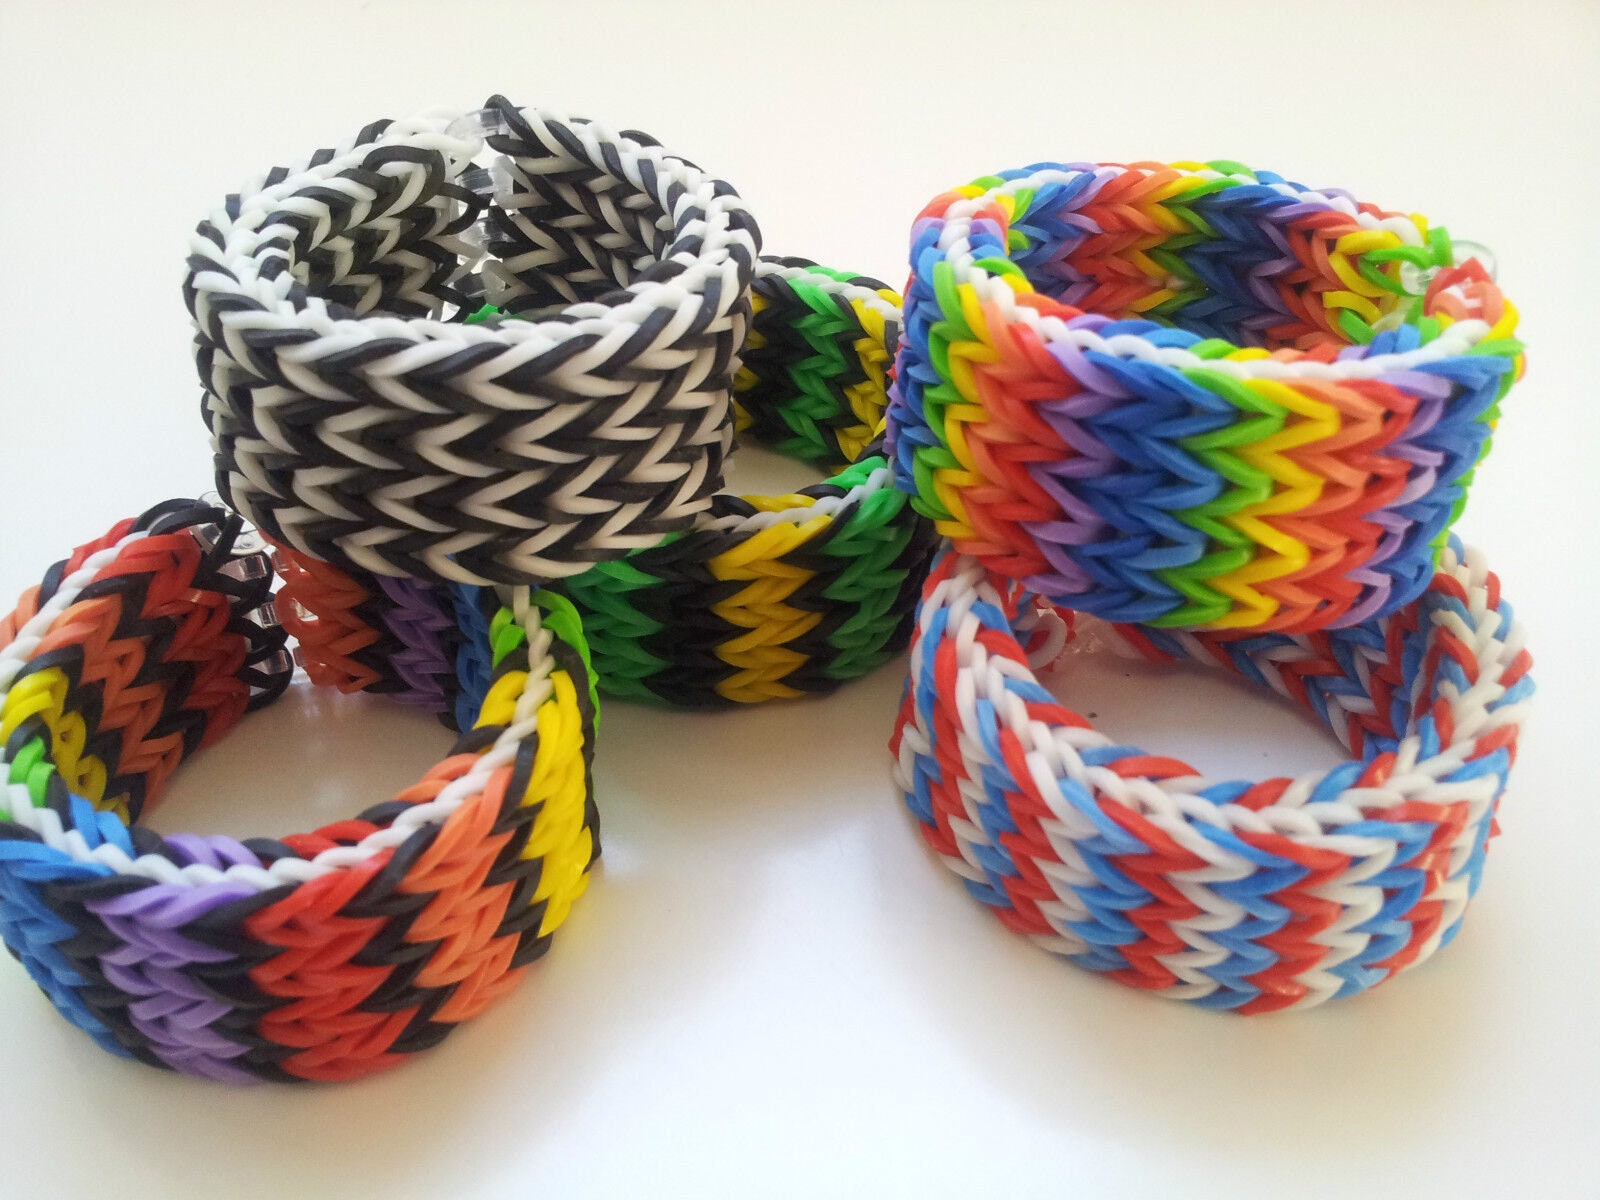 Custom Silicone Wristbands | Rubber Bracelets